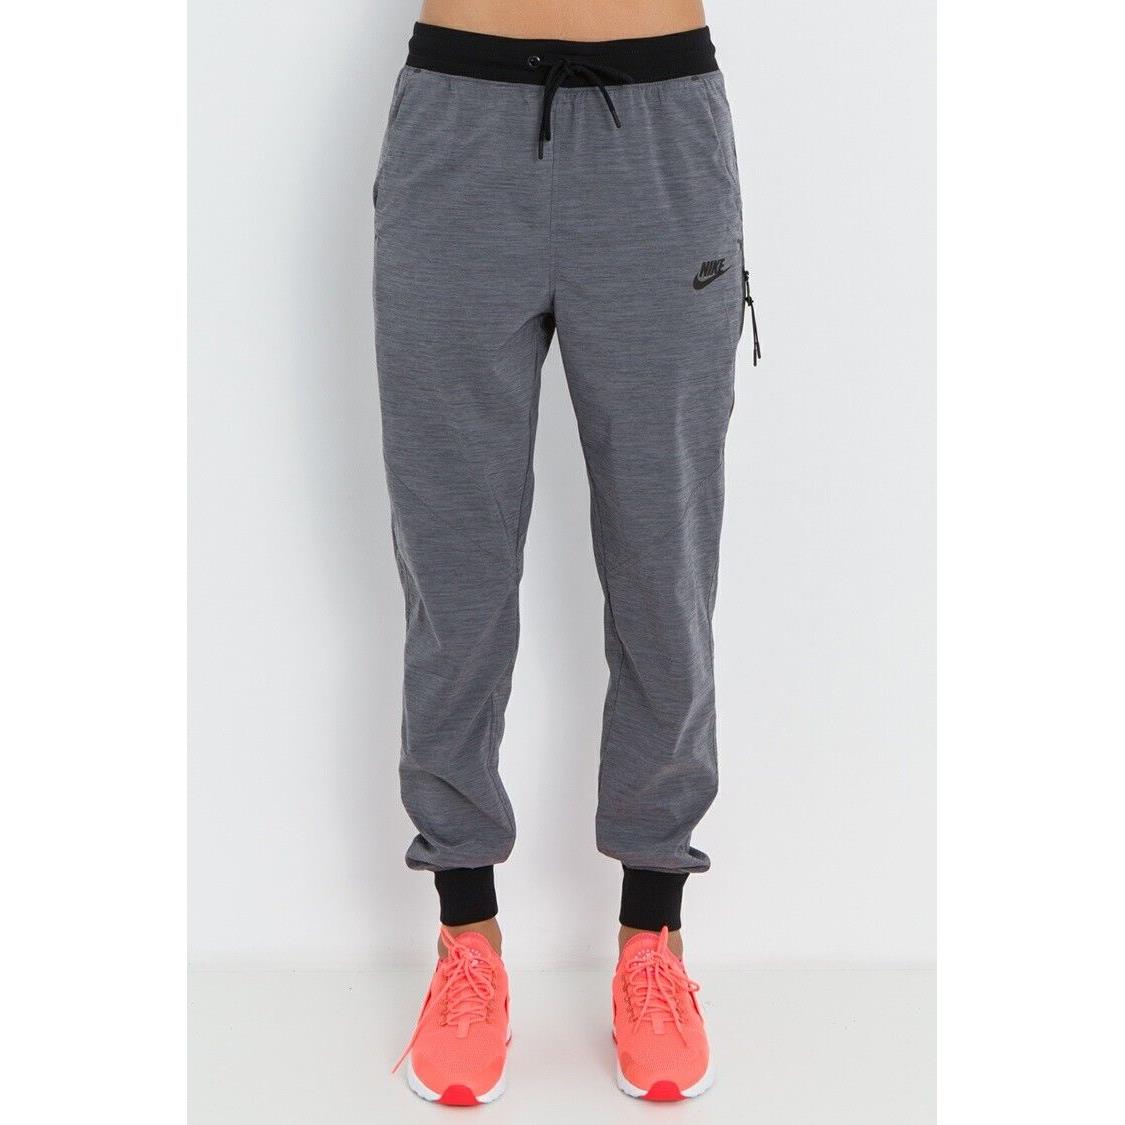 Women`s Nike Bonded Woven Pants Style 728196 060 Charcoal Grey Retail